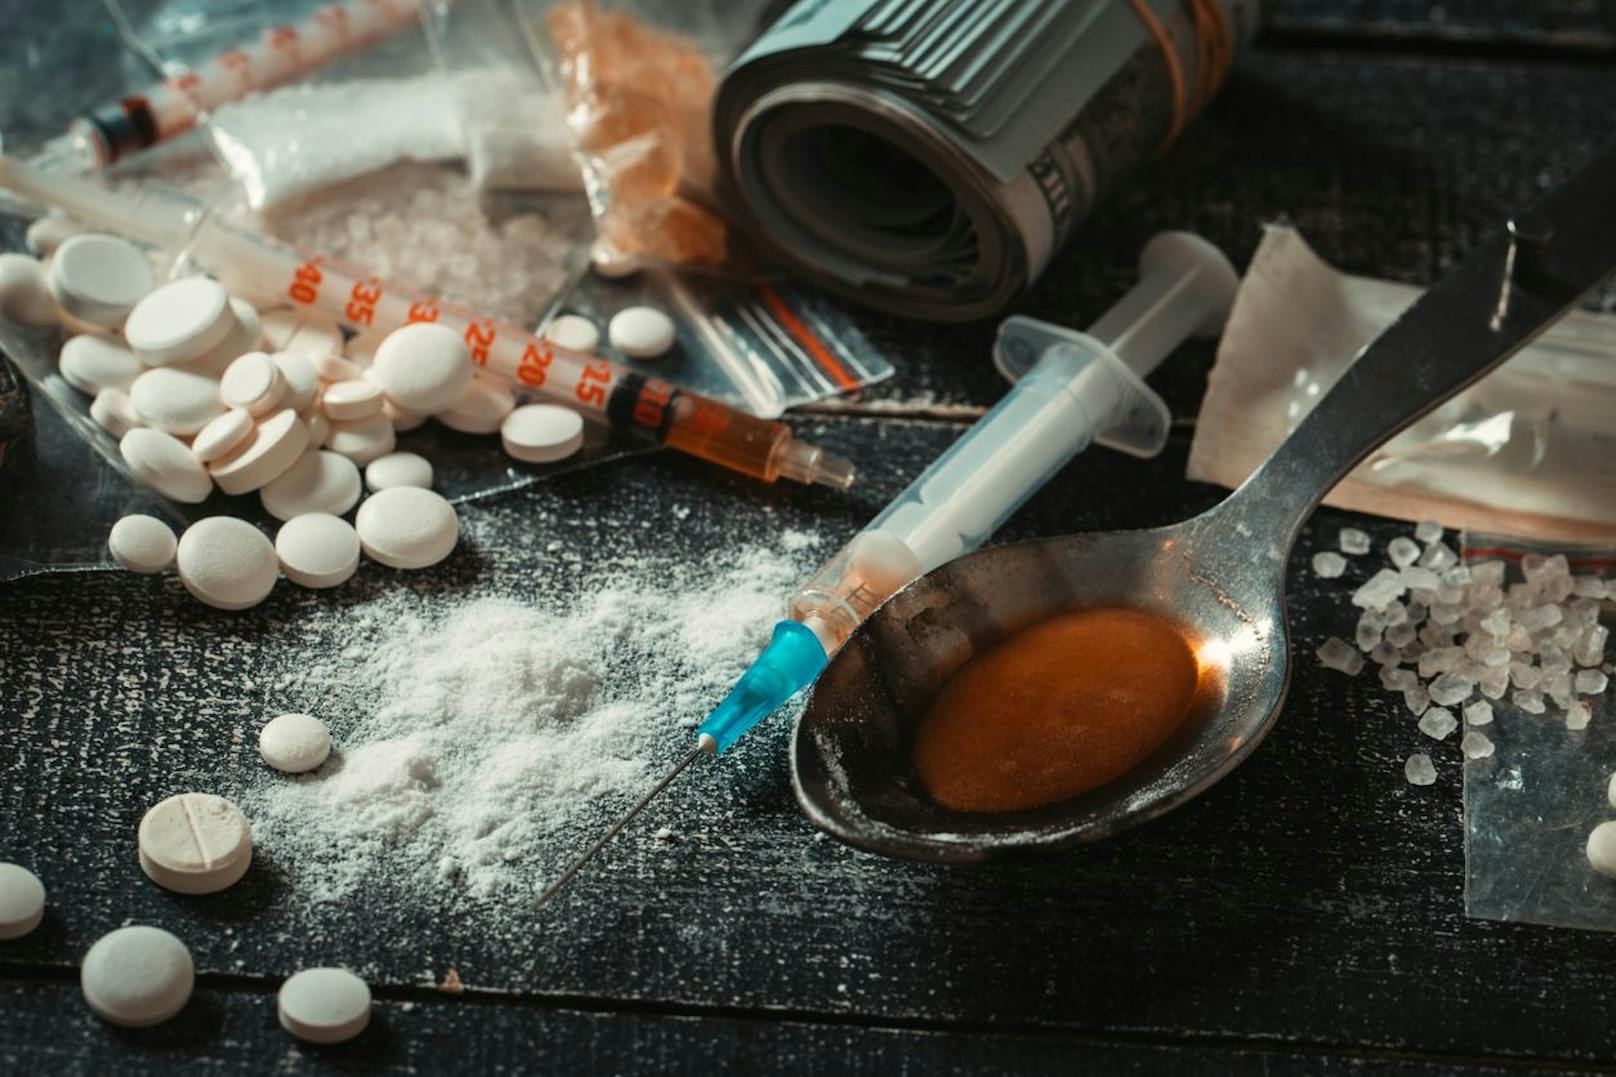 Drogenring gesprengt – jüngster Täter ist erst 16 Jahre